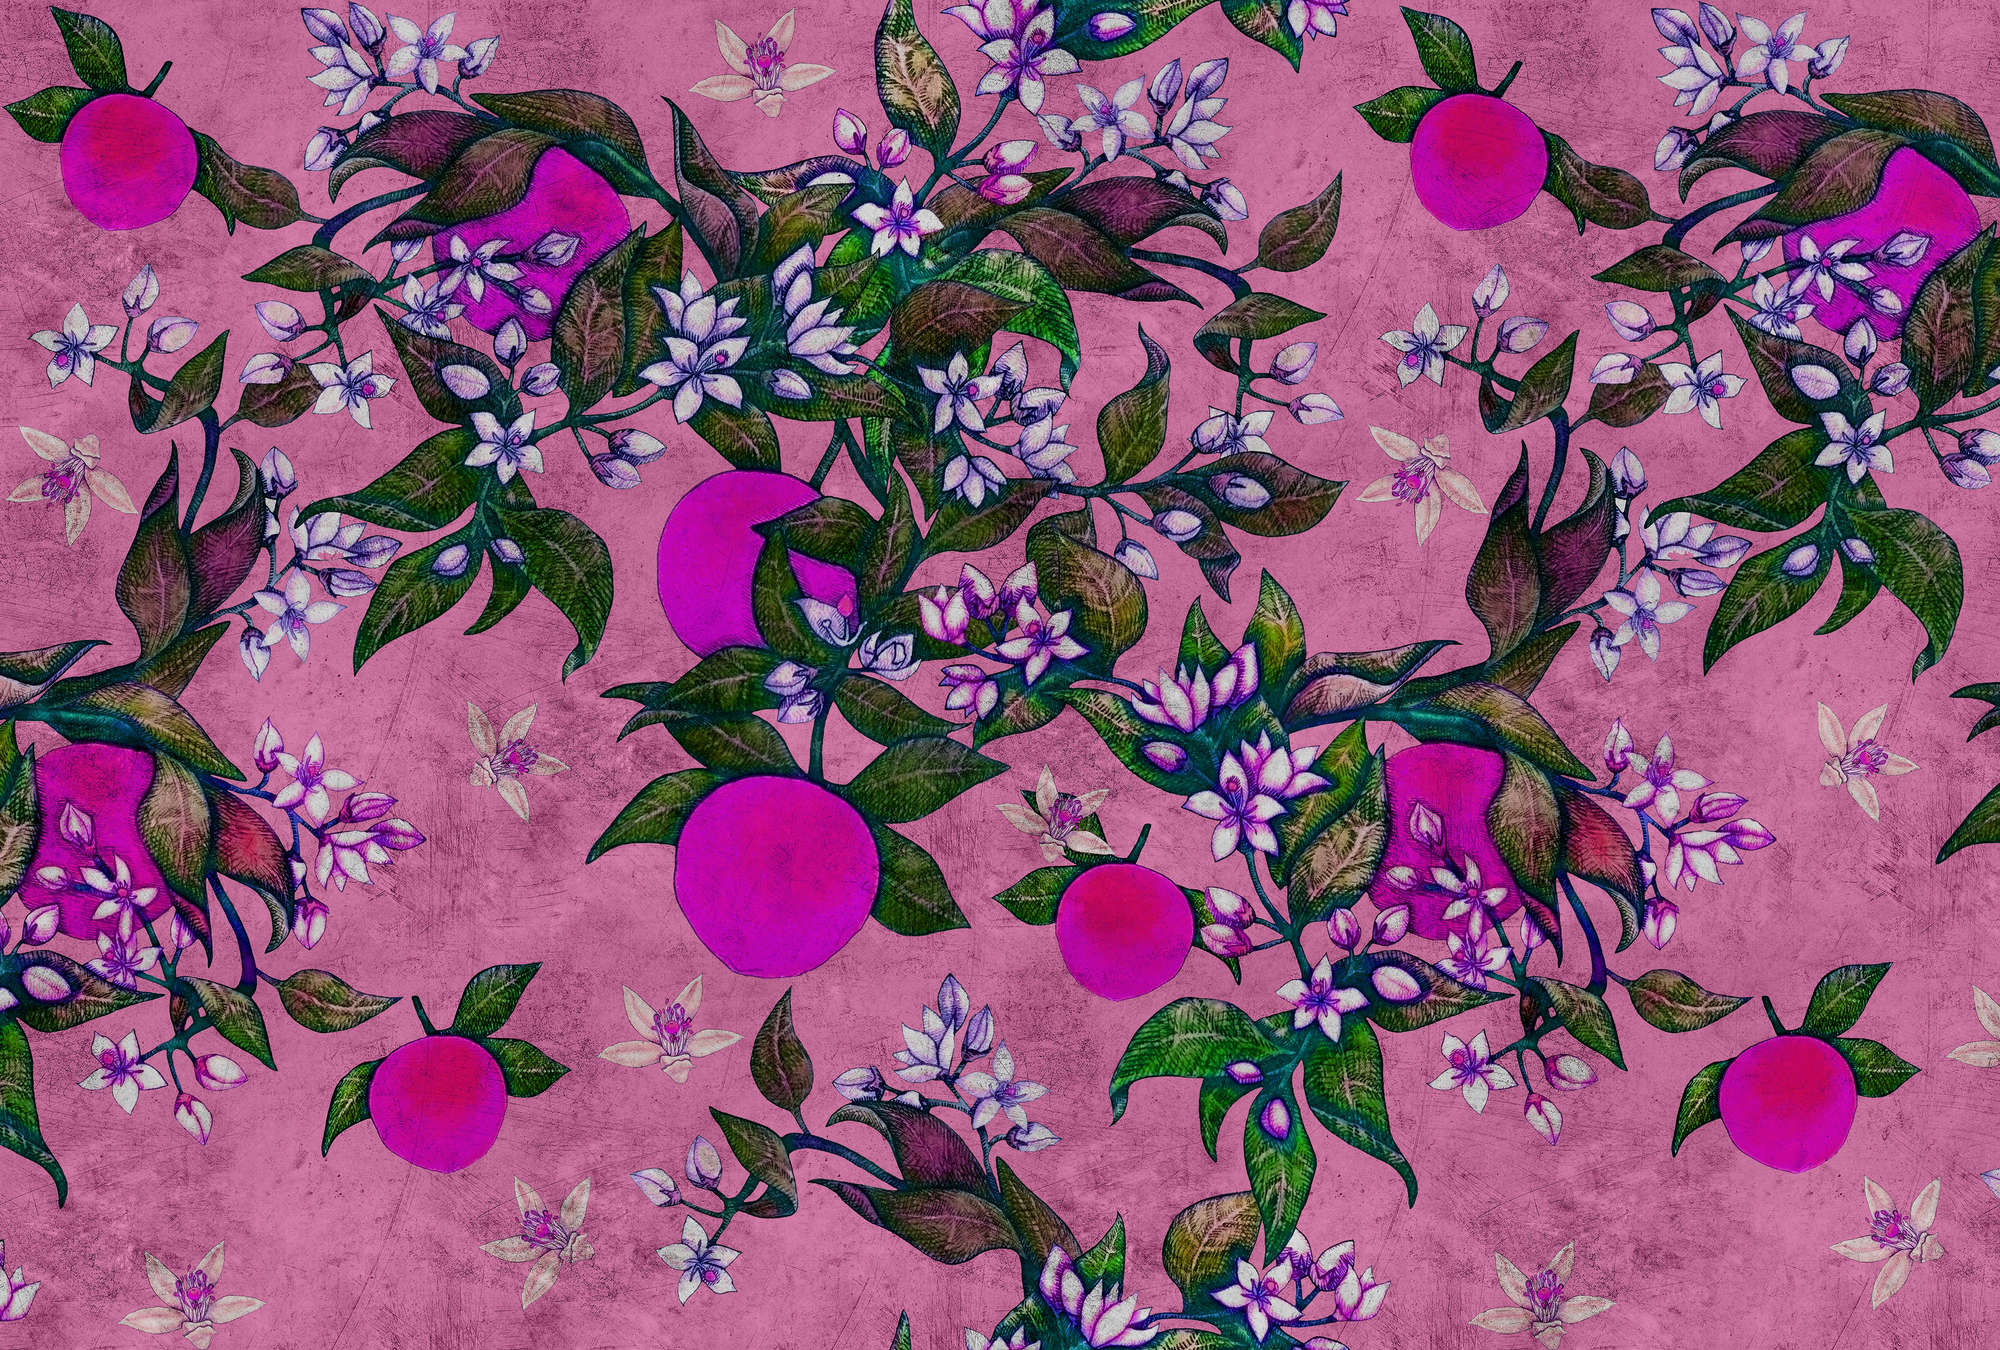             Grapefruit Tree 2 - Digital behang met pompelmoes & bloem ontwerp in krasse textuur - Roze, Paars | Parel gladde fleece
        